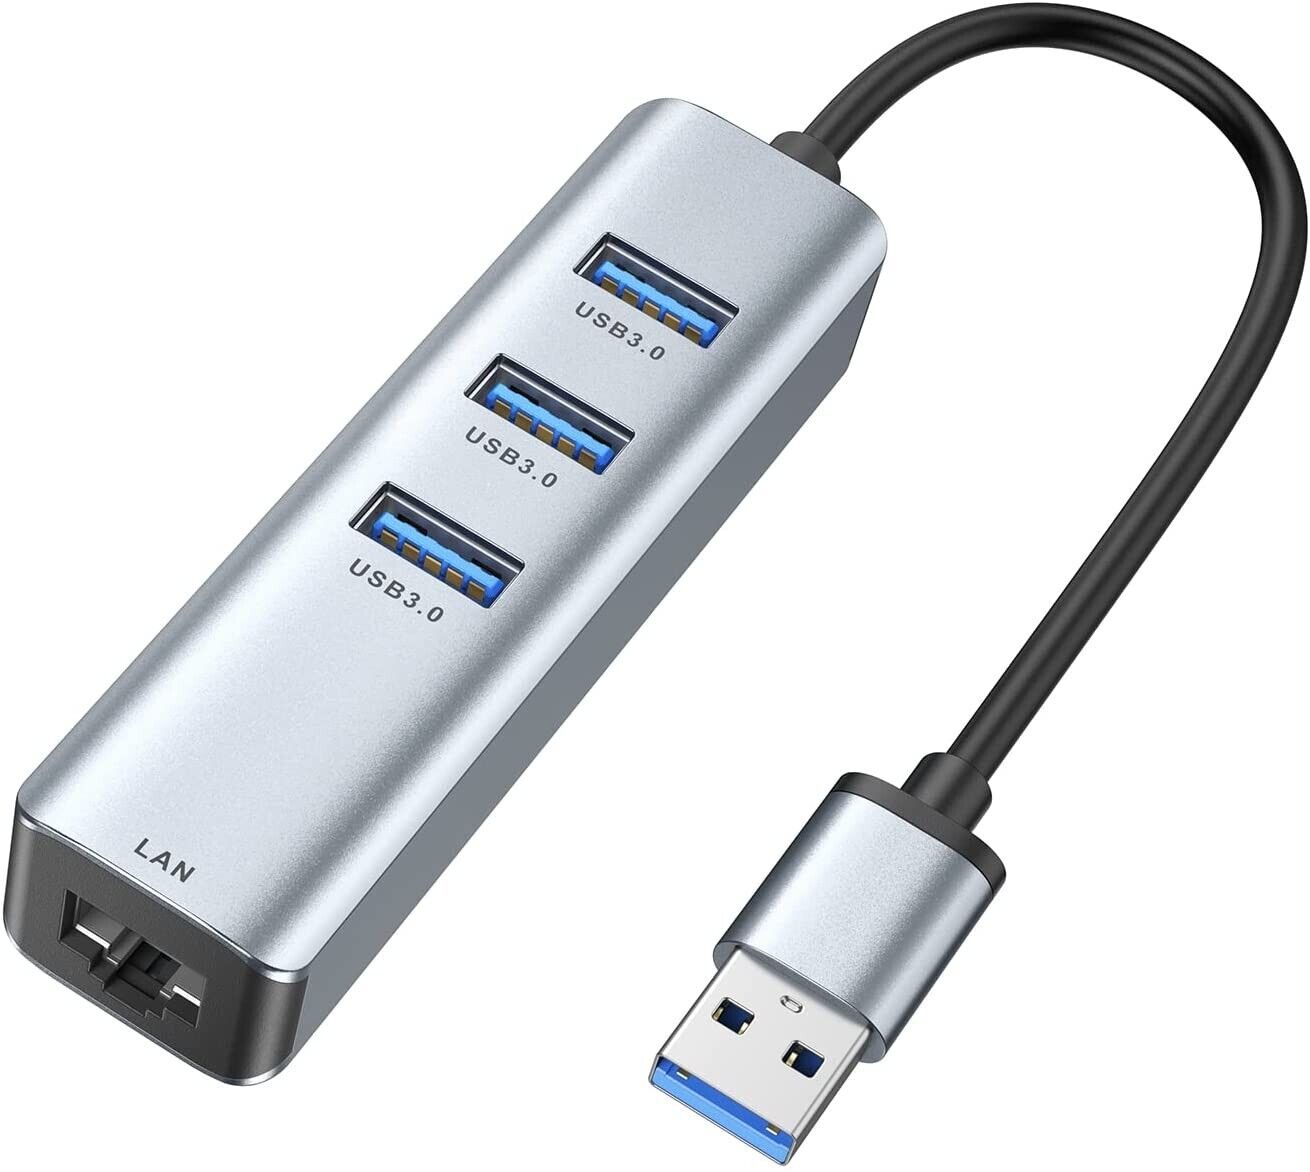 25x USB 3.0 to Ethernet Adapter ABLEWE 3-Port USB 3.0 Hub for Windows/Mac/Linux